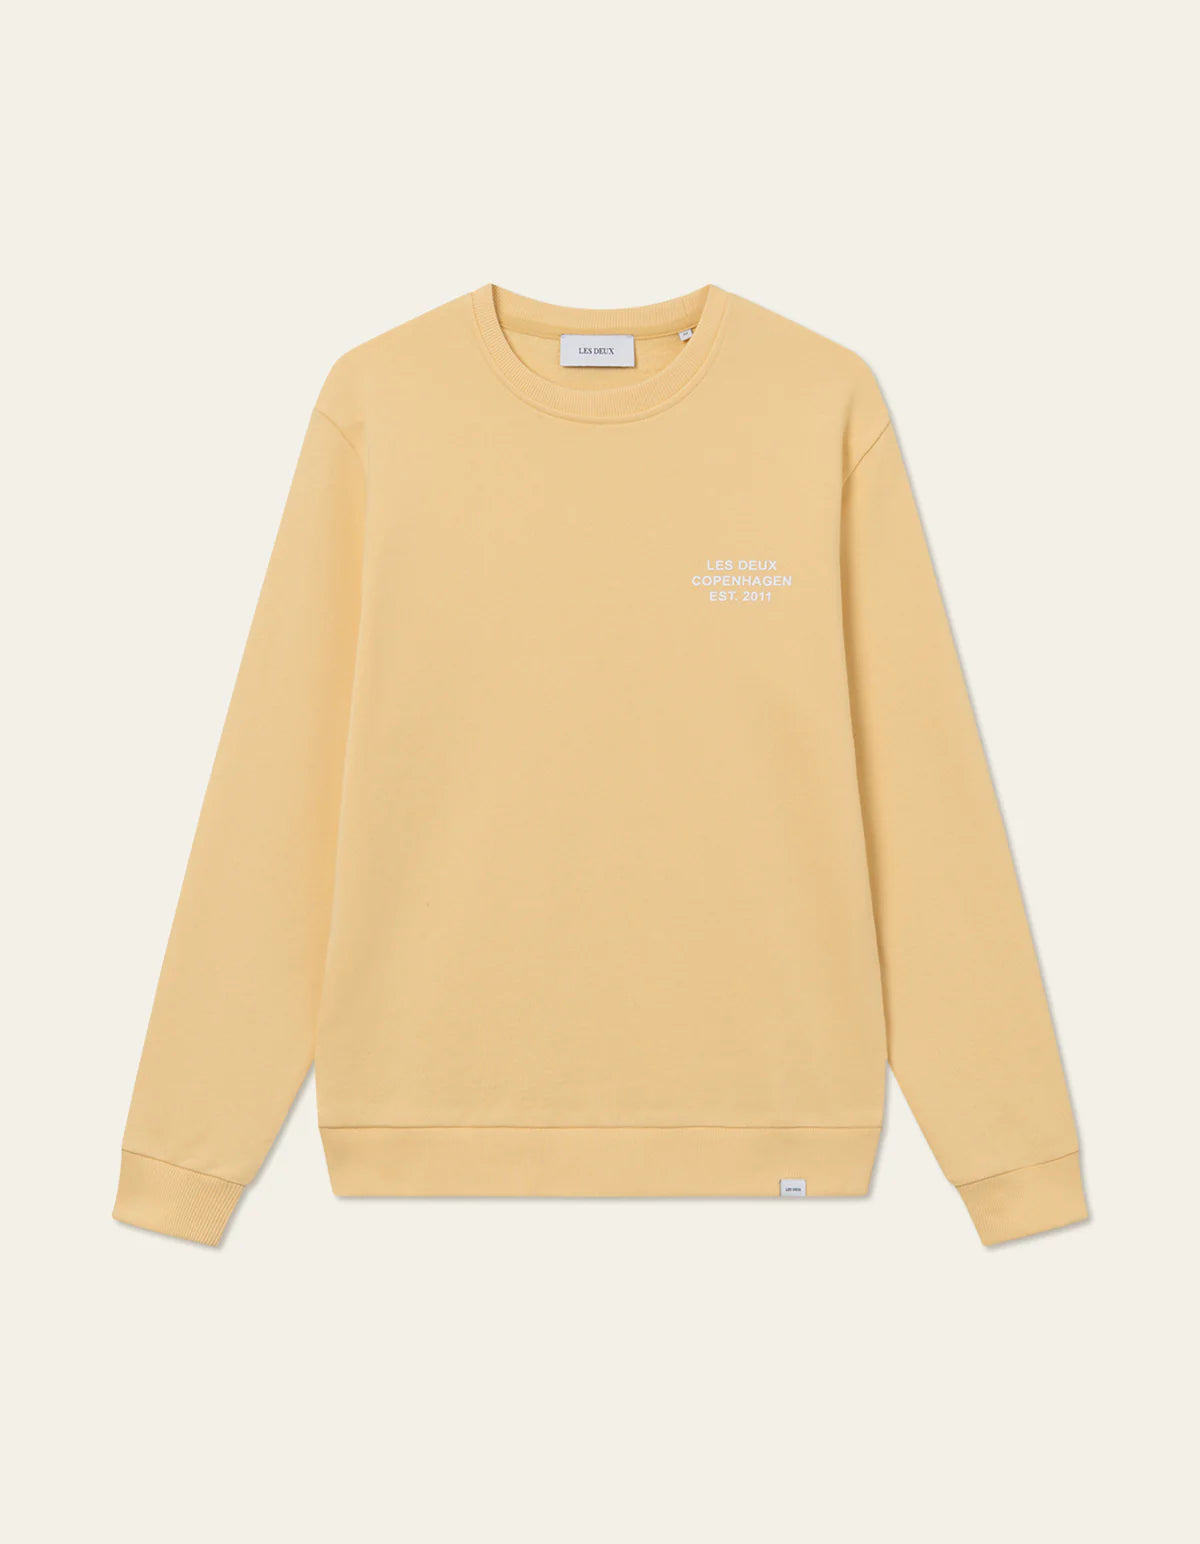 Copenhagen sweater creamy yellow/white - Les Deux Copenhagen